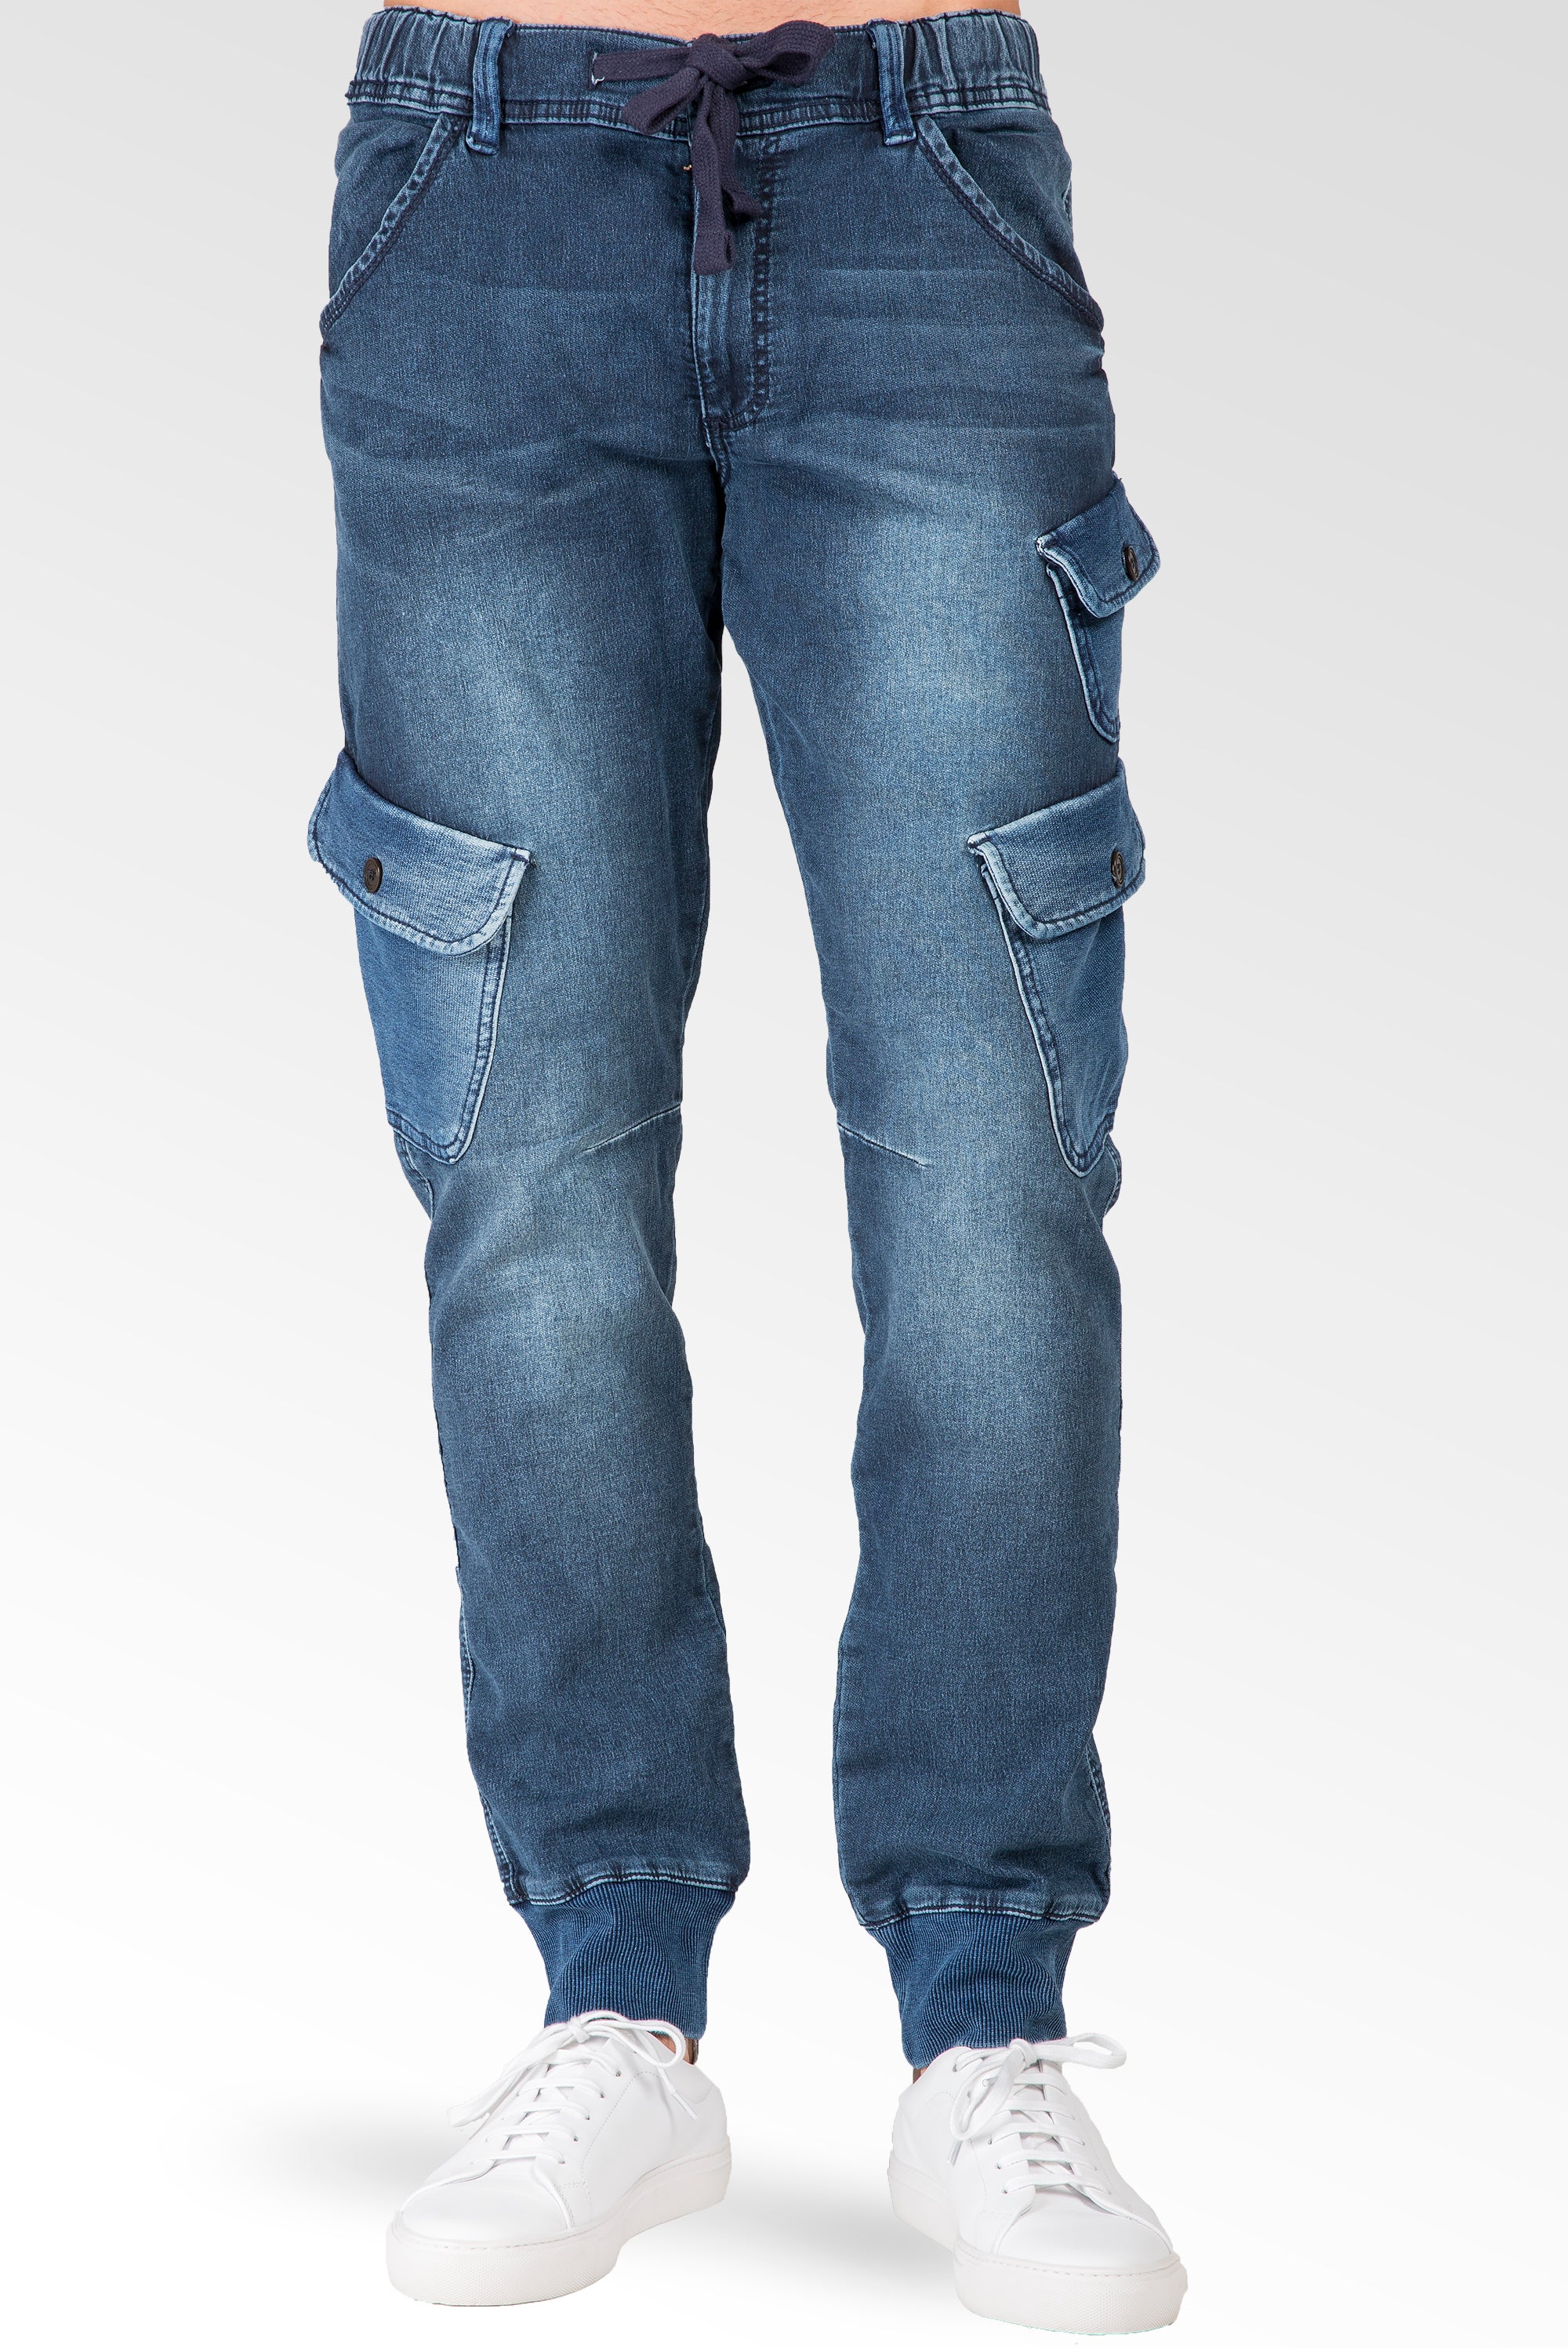 Men Denim Sets Streetwear Bomber Long Sleeve Cowboy Jacket Cargo Pants  Light Blue Two Piece Set at Amazon Men's Clothing store